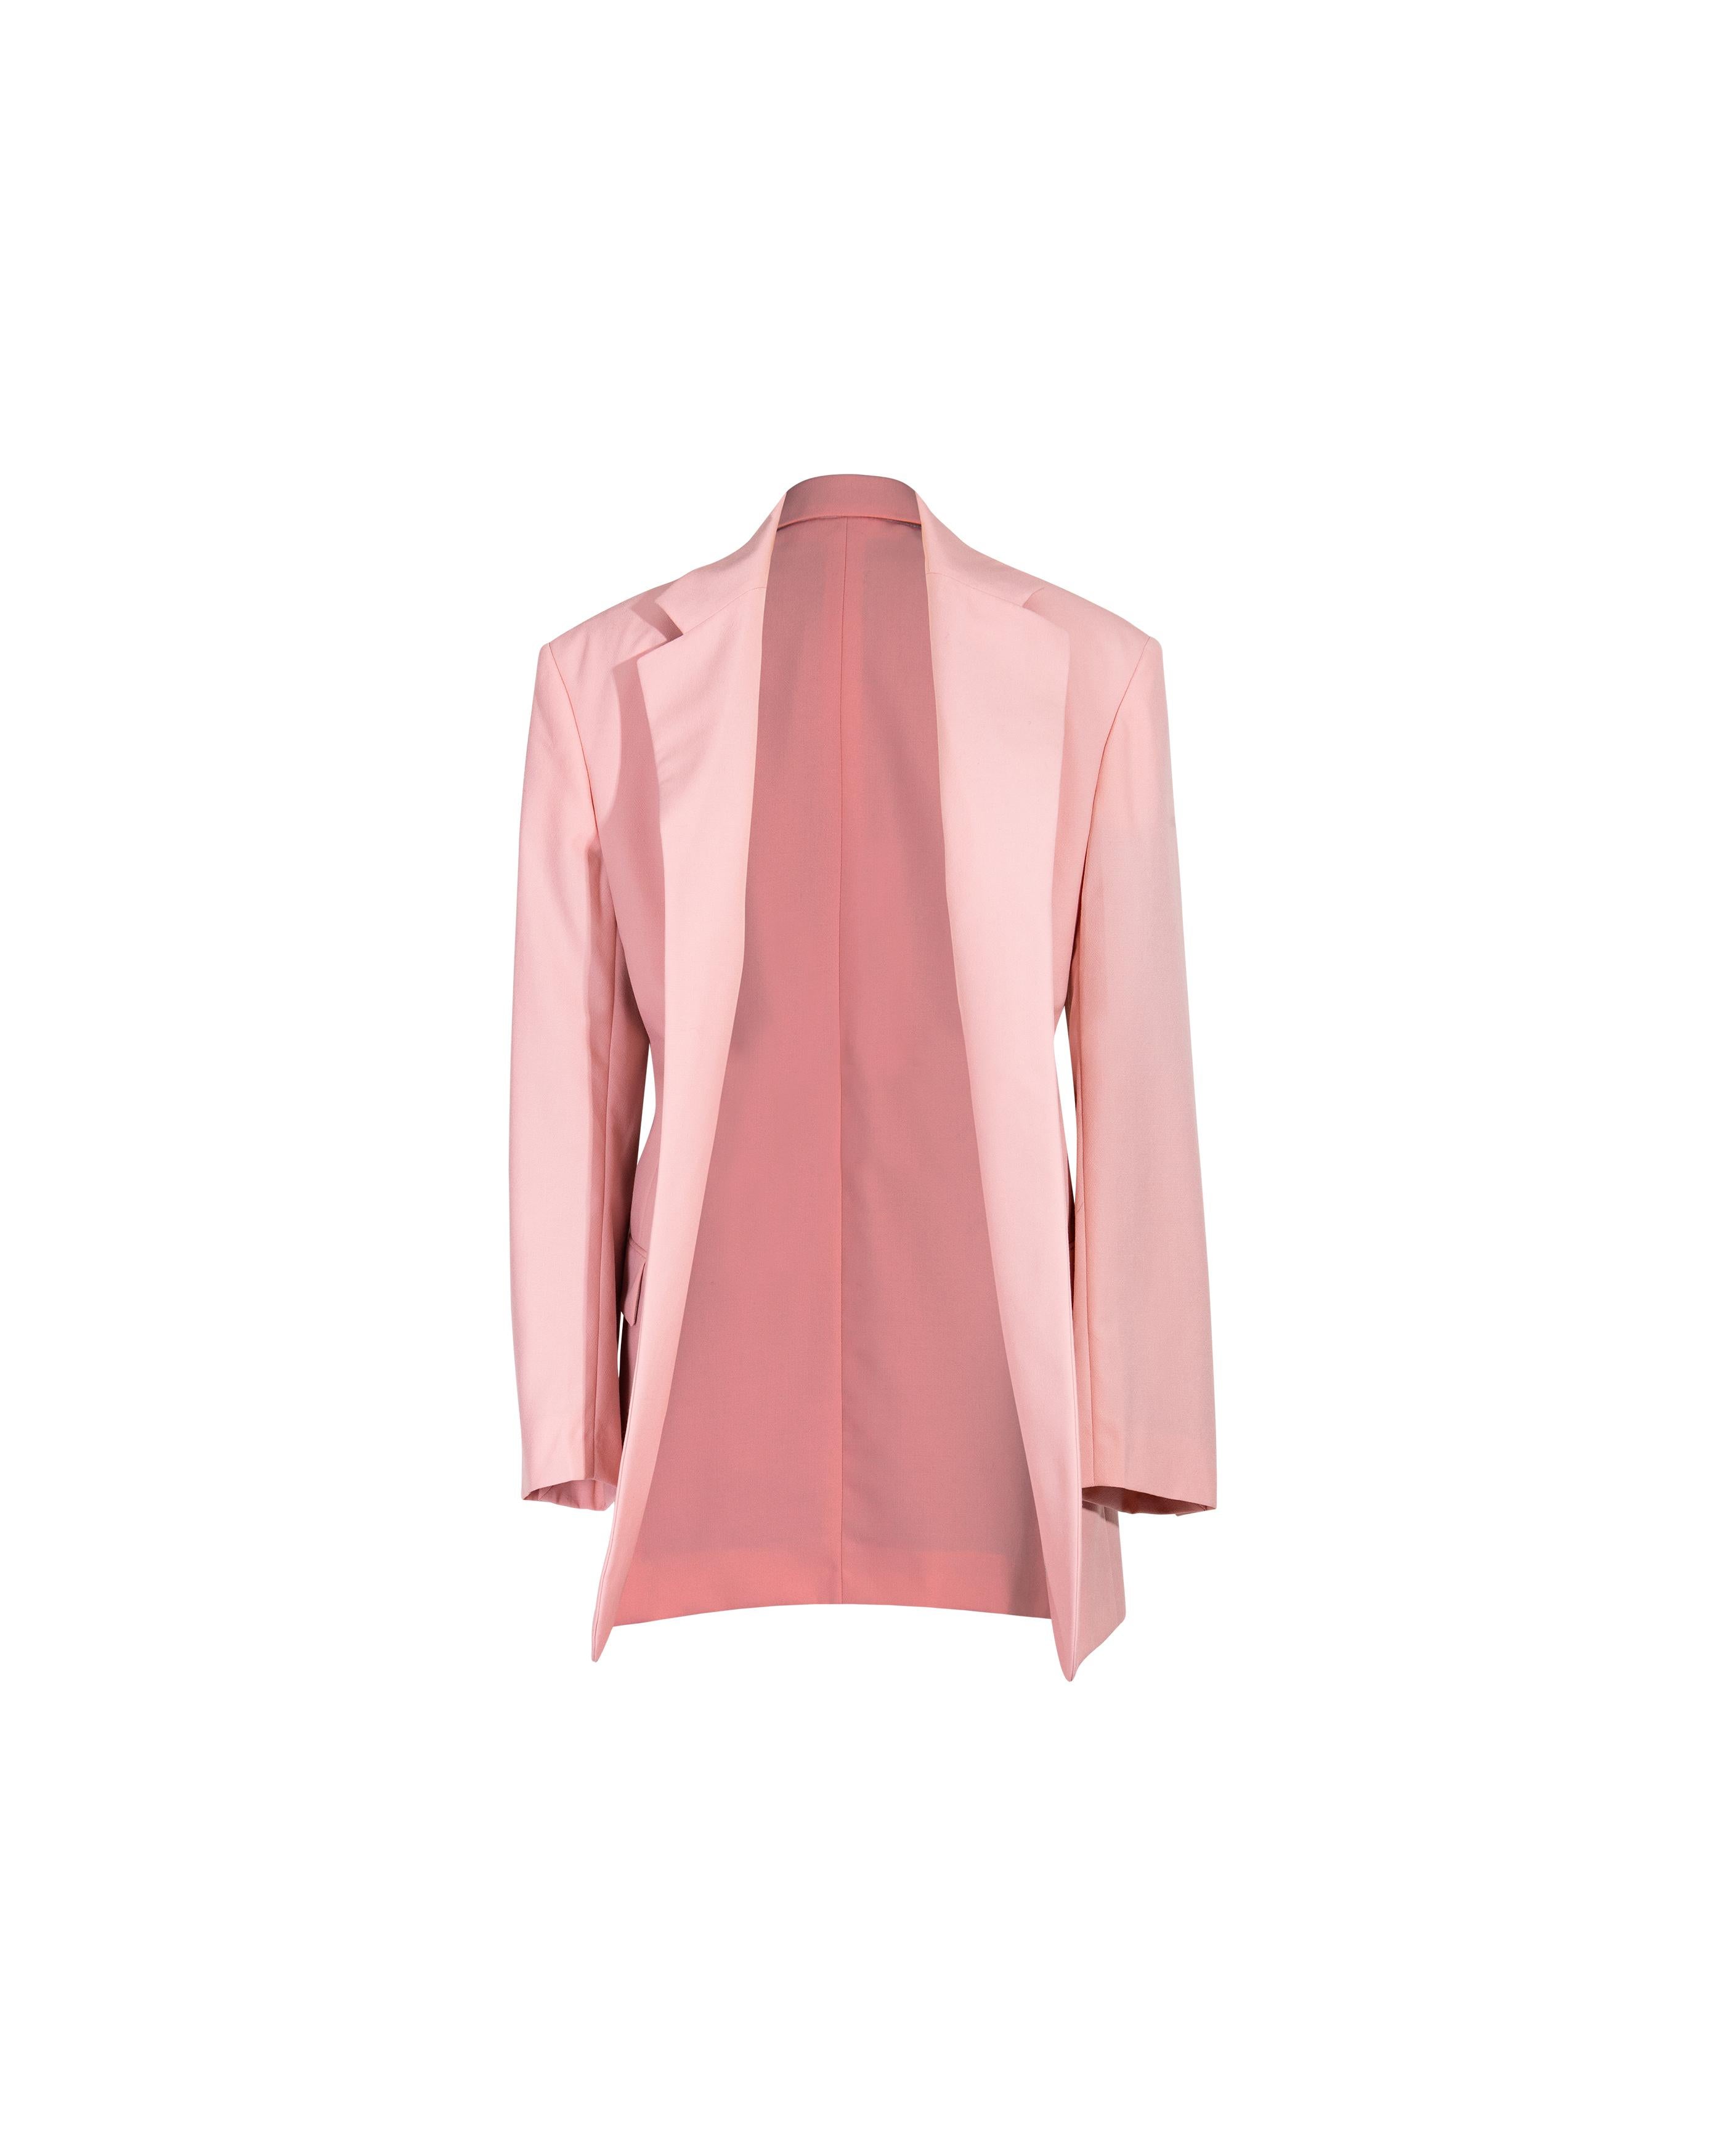 S/S 2018 Old Céline by Phoebe Philo Blush Pink Wool Suit Set 1